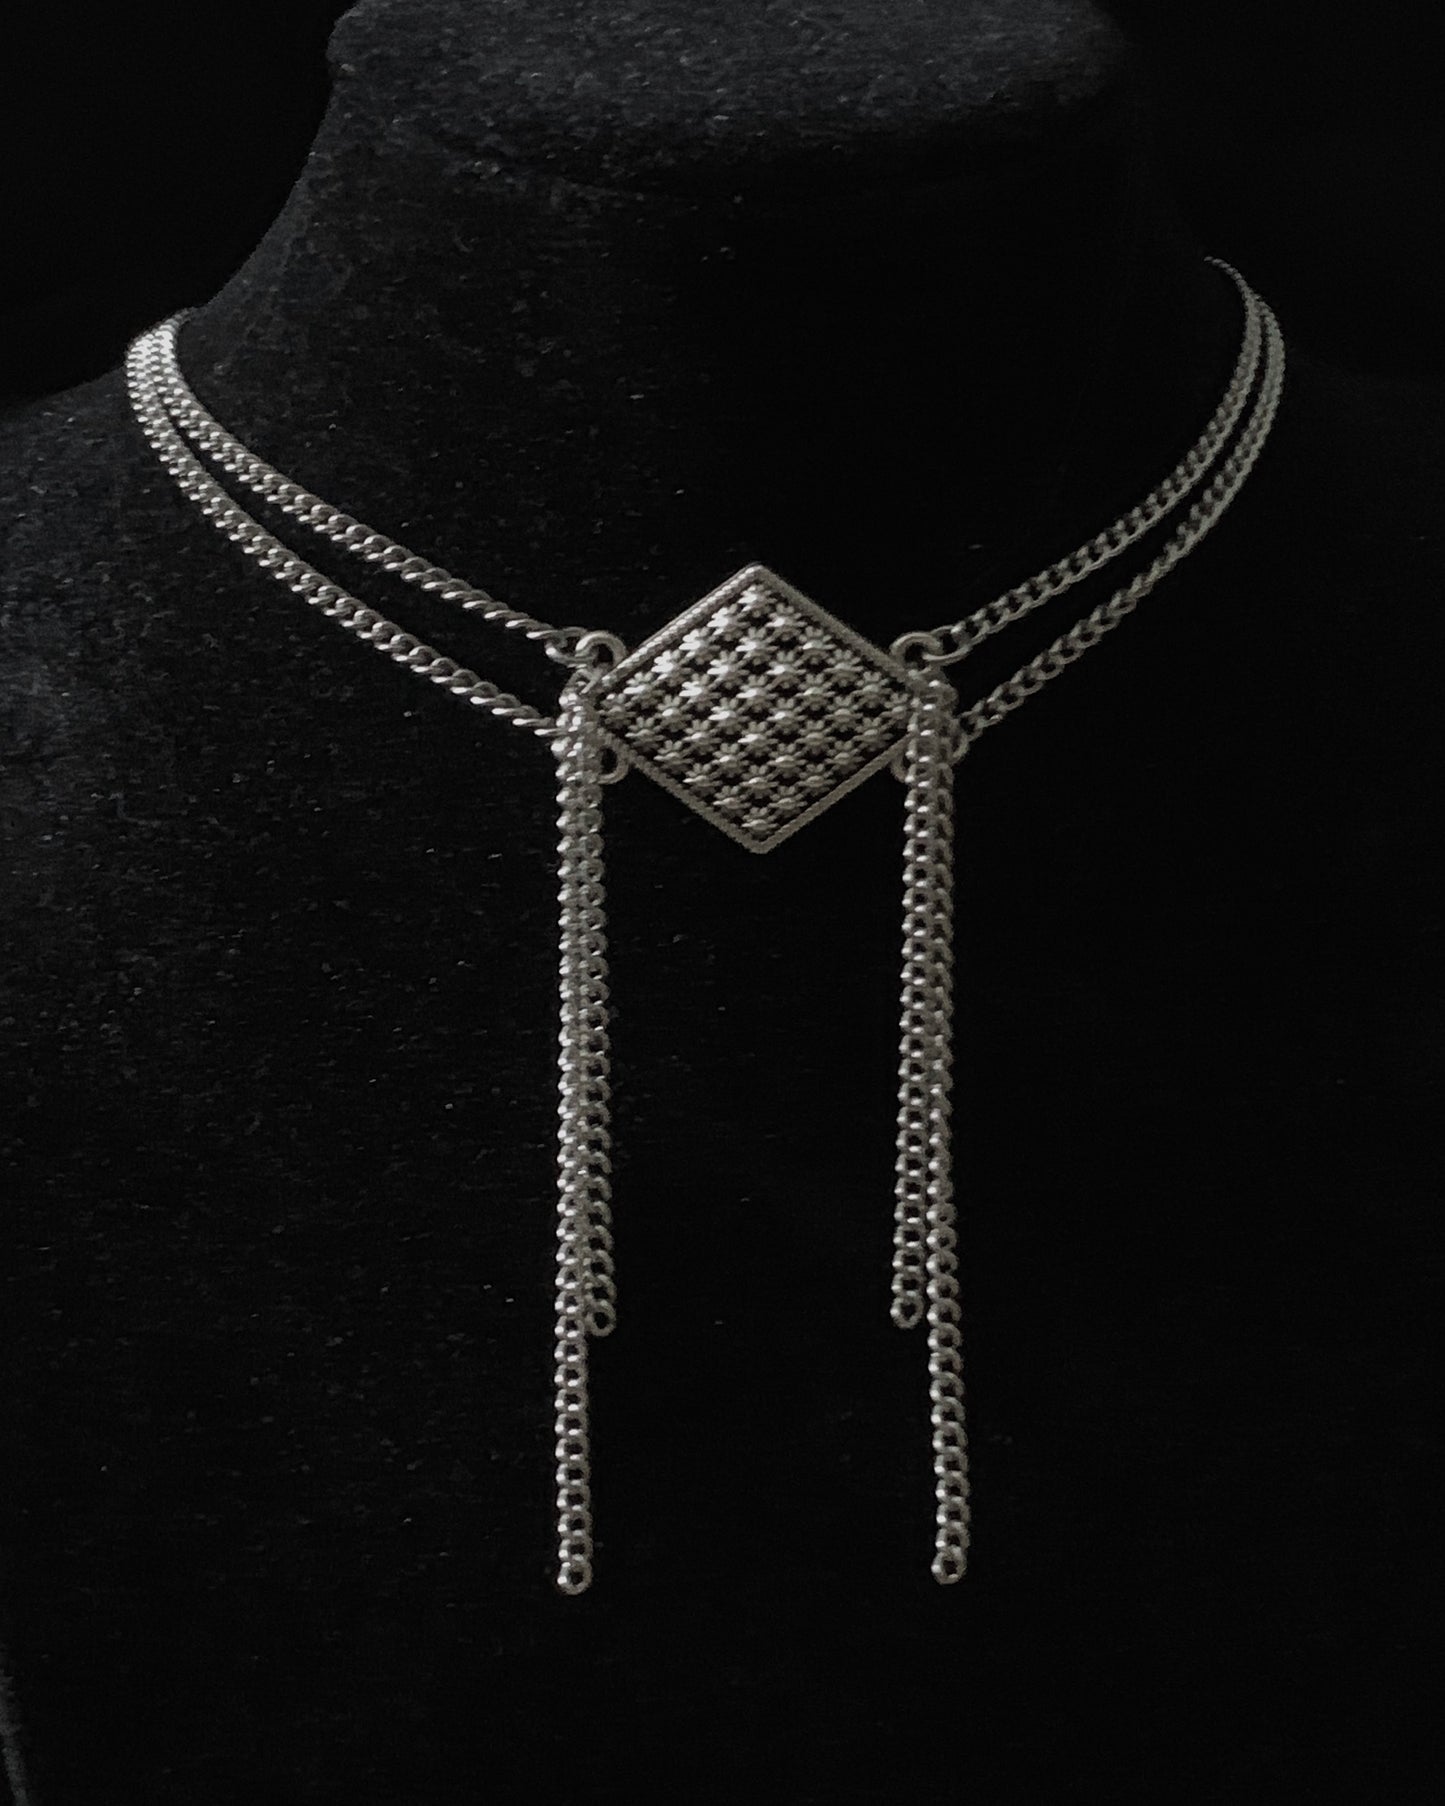 Regal necklace